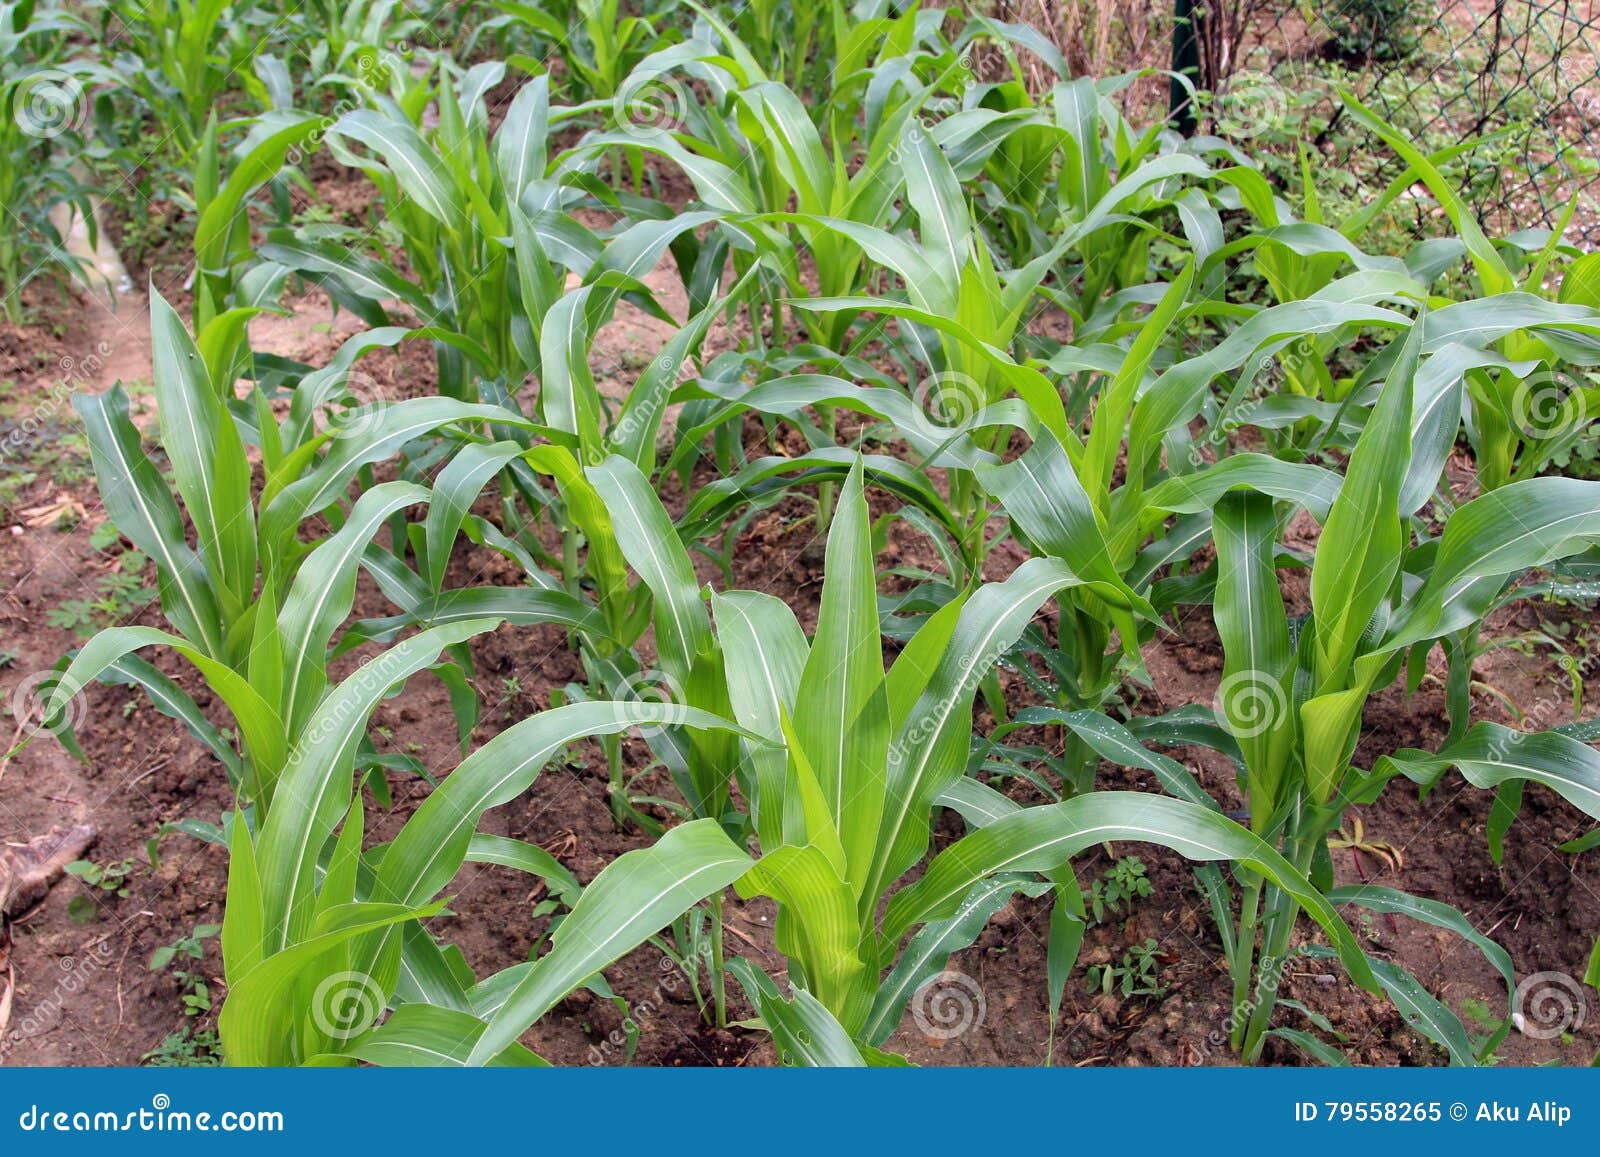 How a Corn Plant Develops